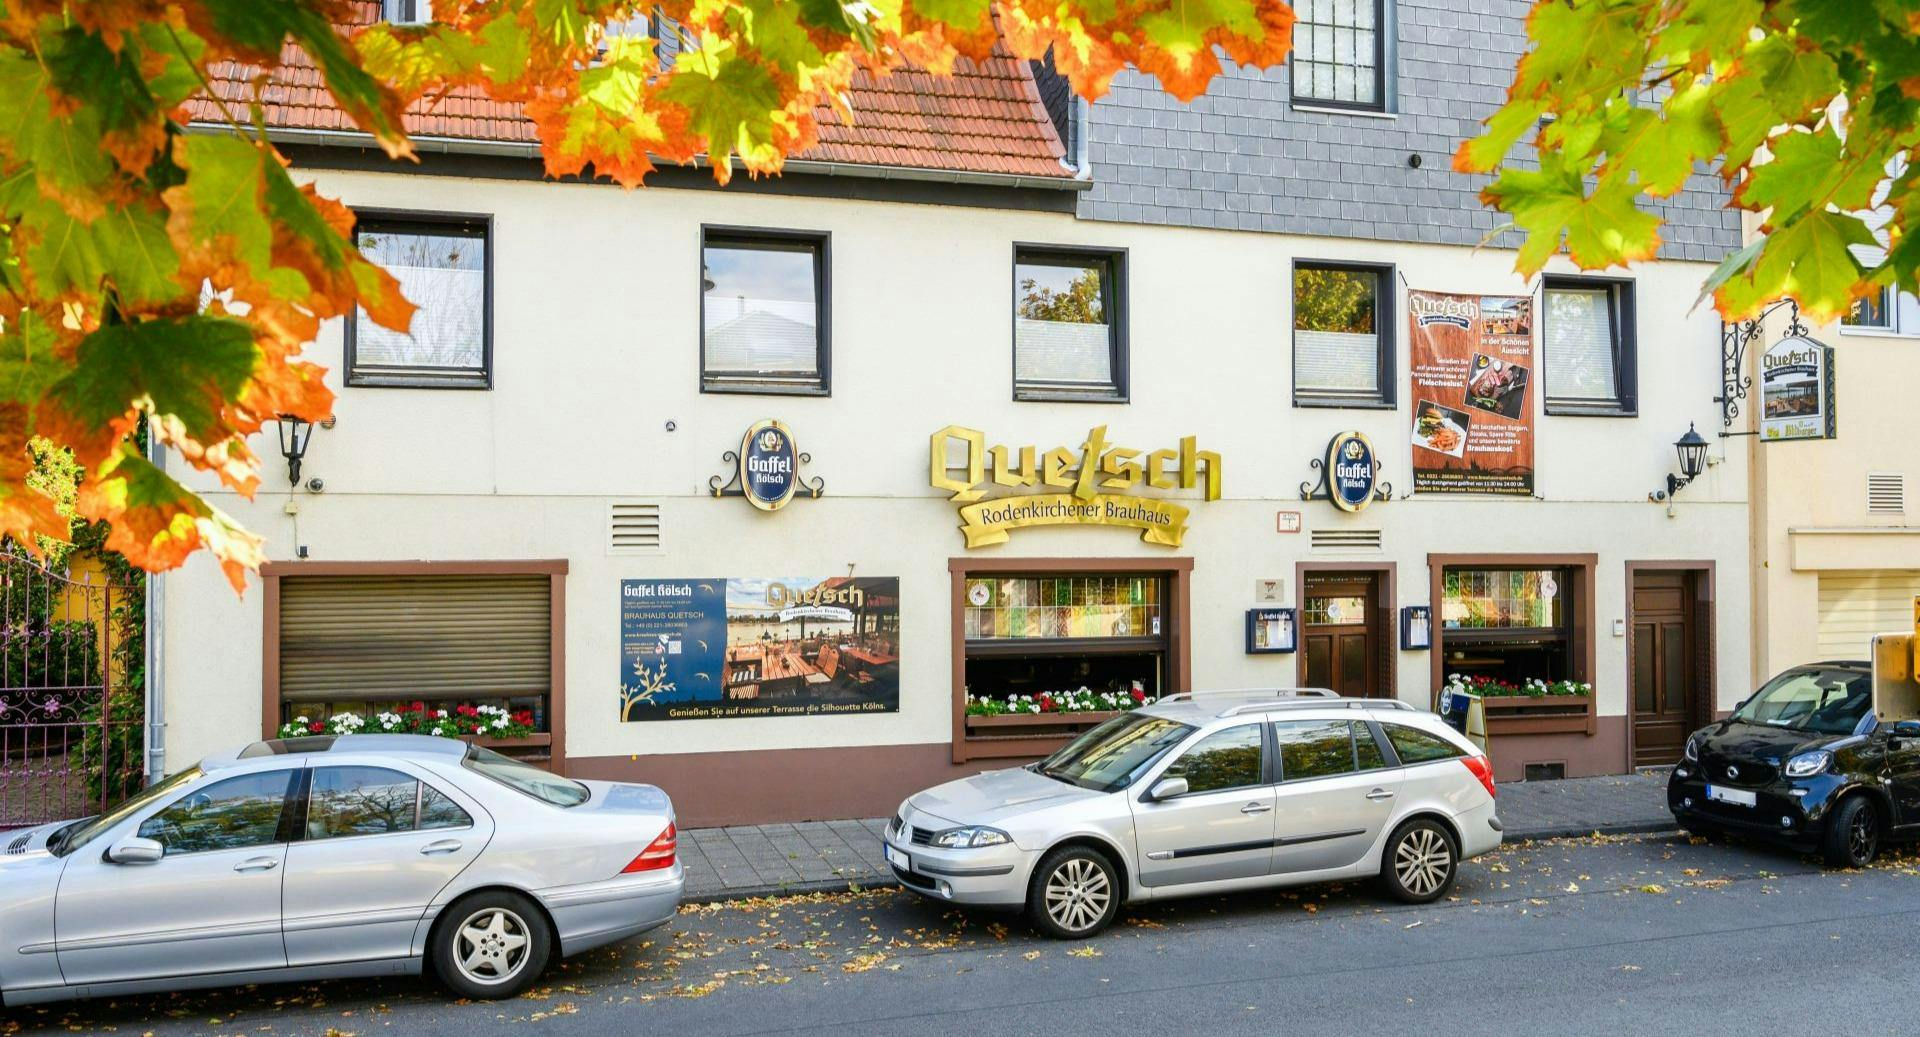 Photo of restaurant Brauhaus Quetsch in Rodenkirchen, Cologne